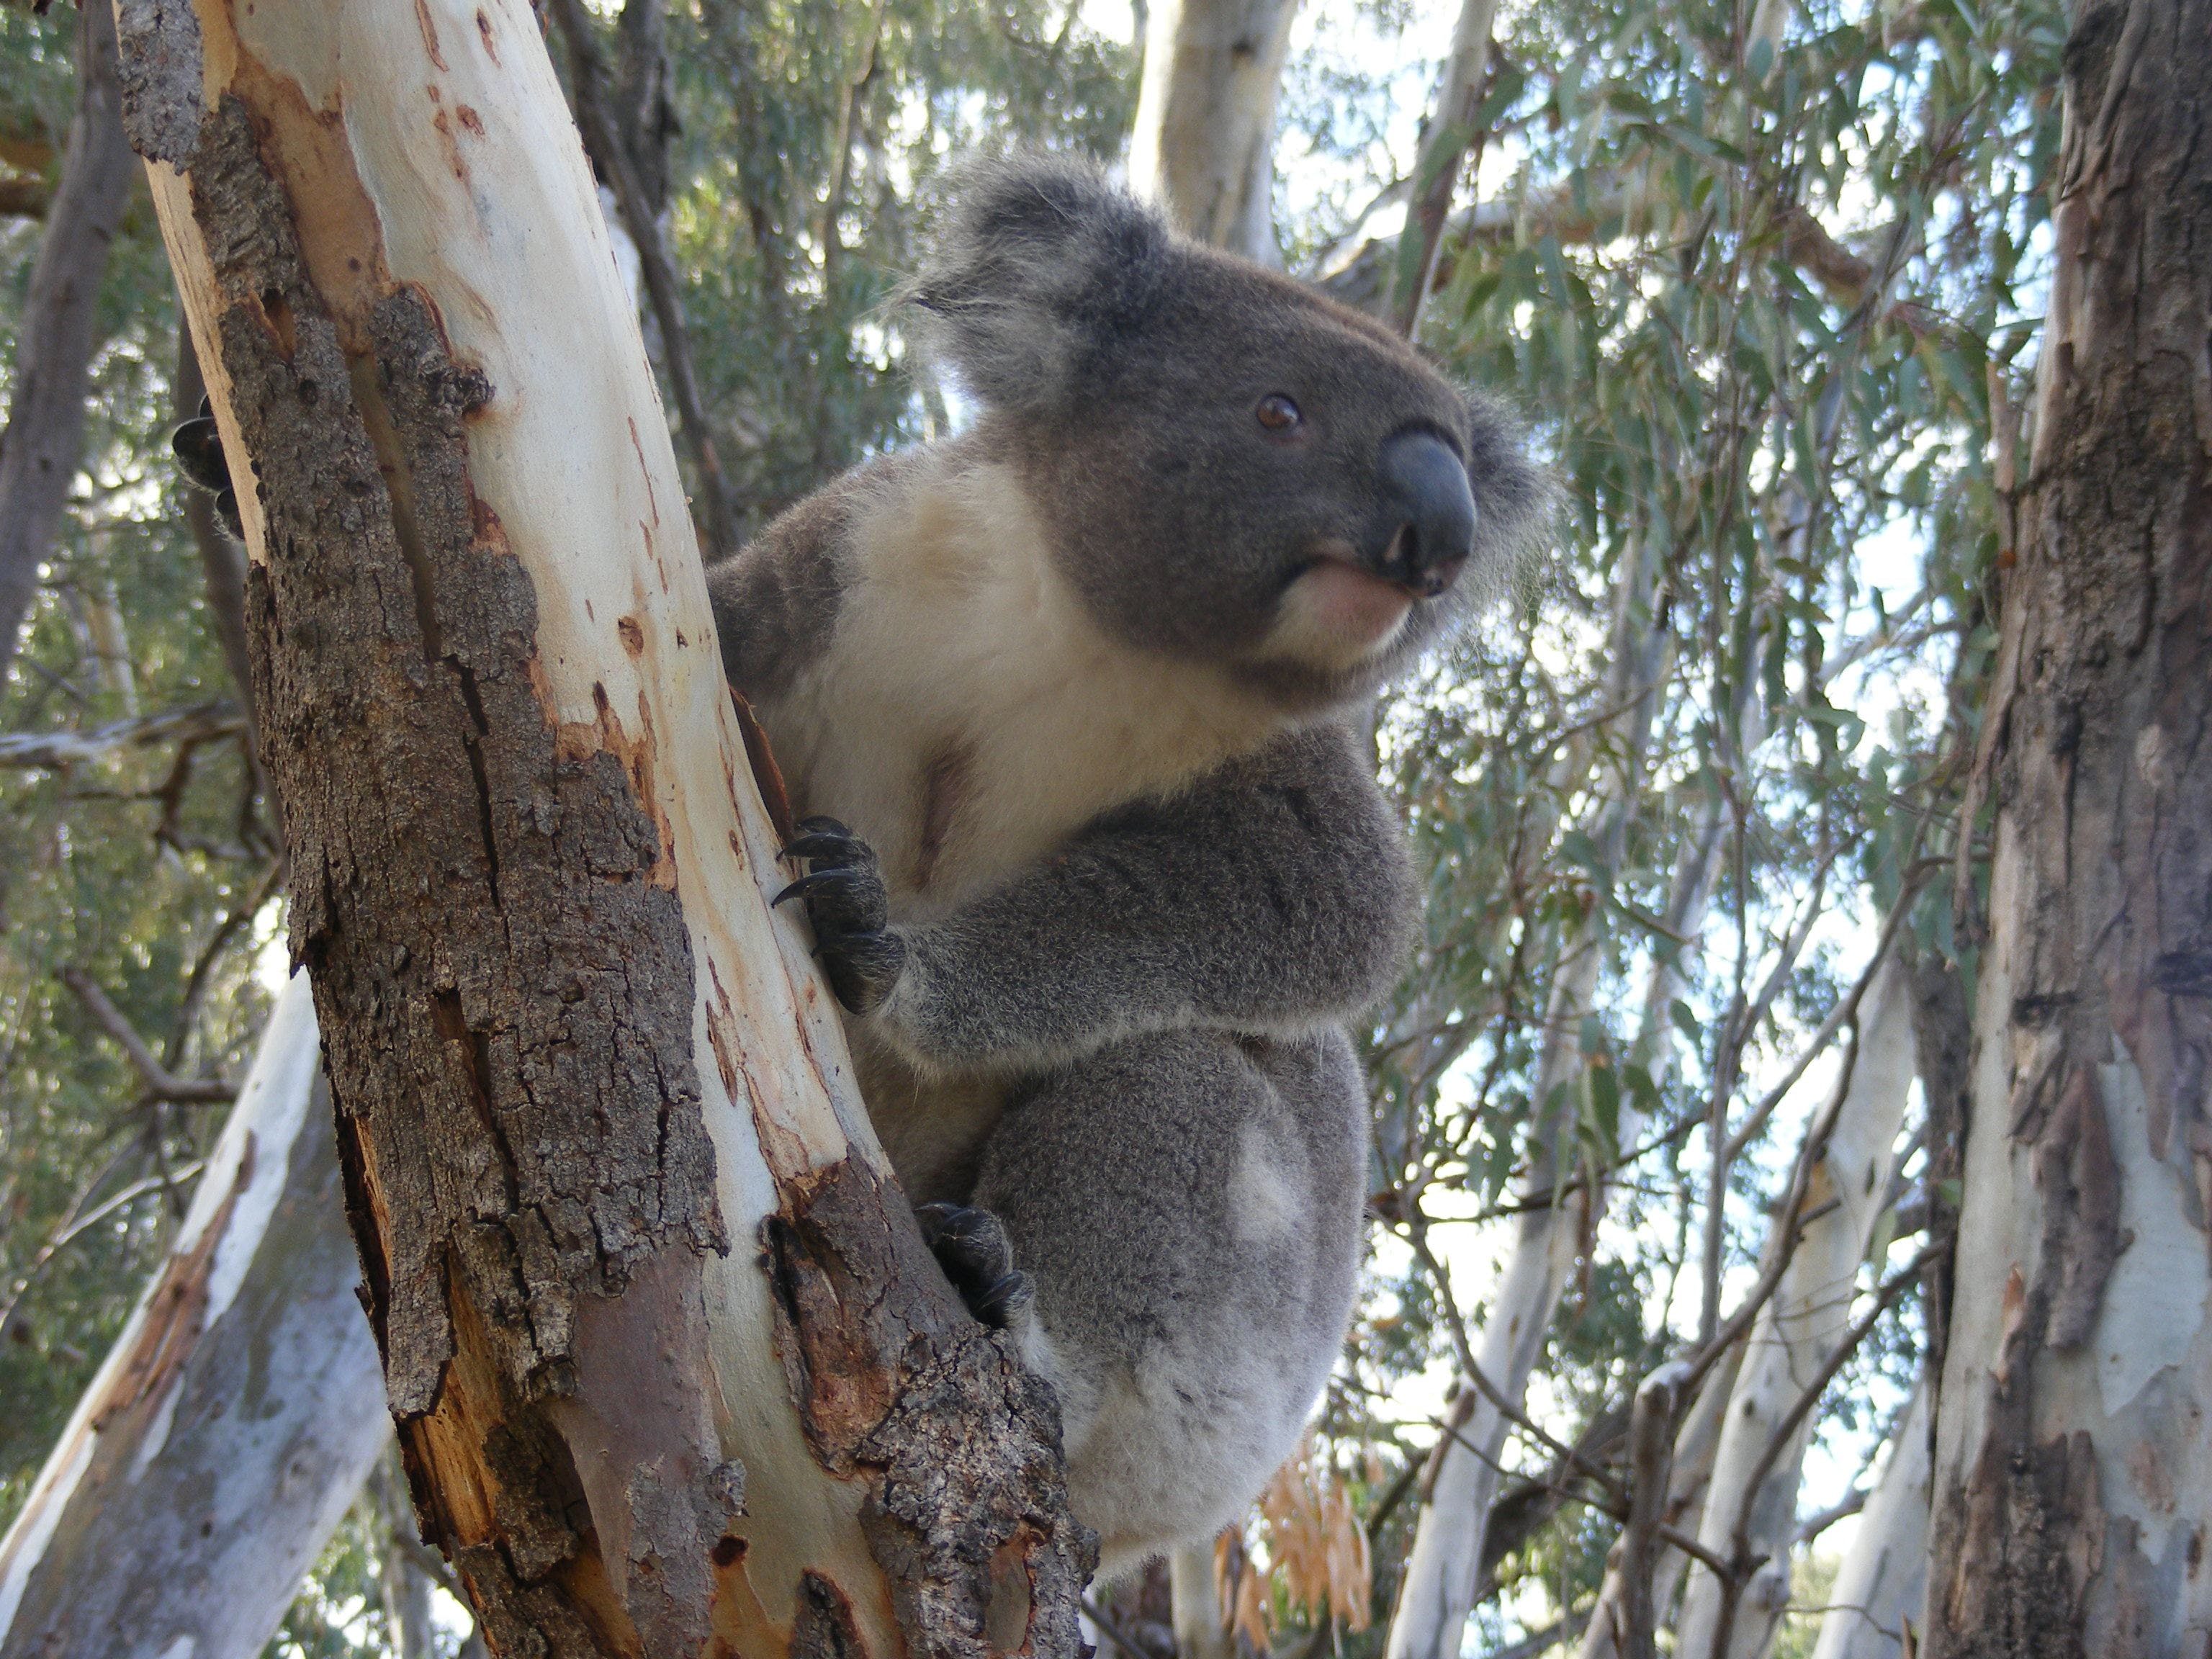 Annual Koala Count - Accommodation Gladstone